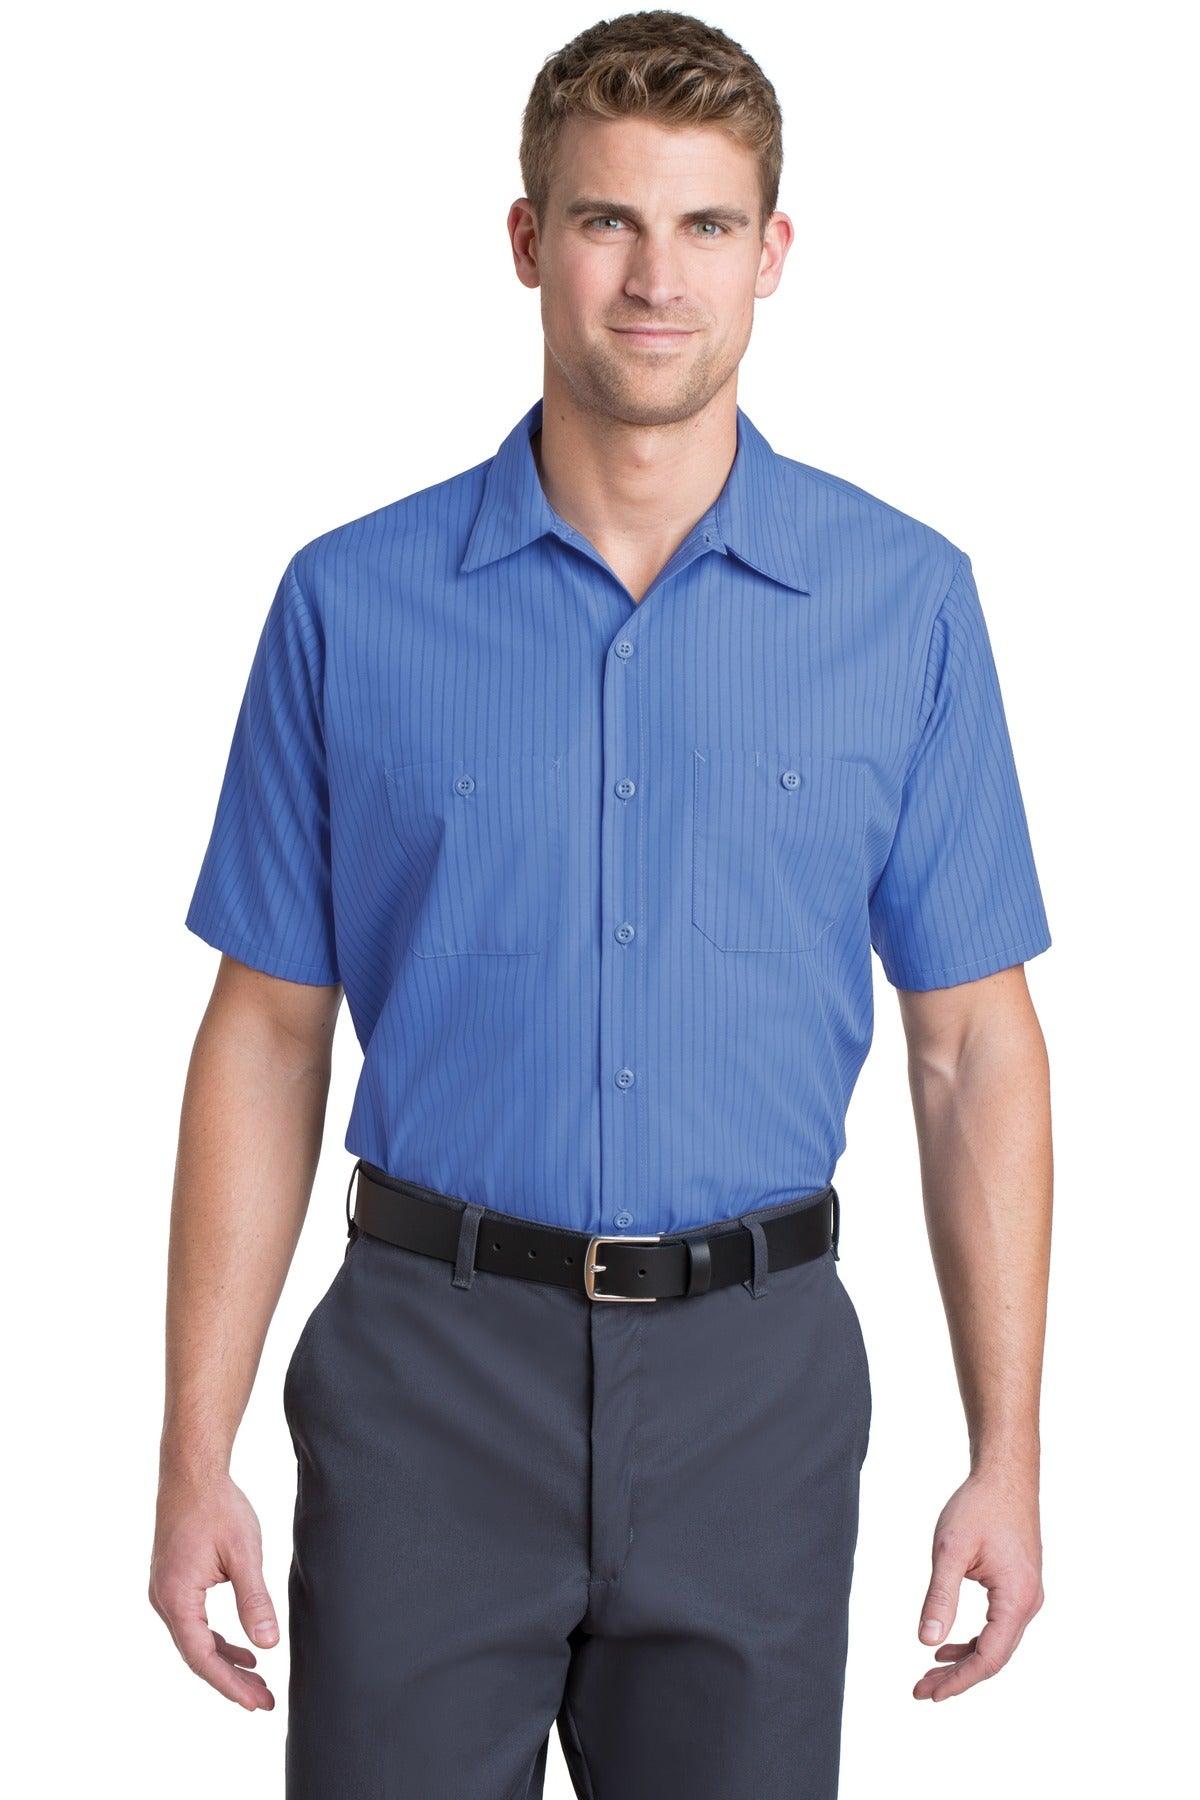 Red Kap Short Sleeve Striped Industrial Work Shirt. CS20 - Dresses Max